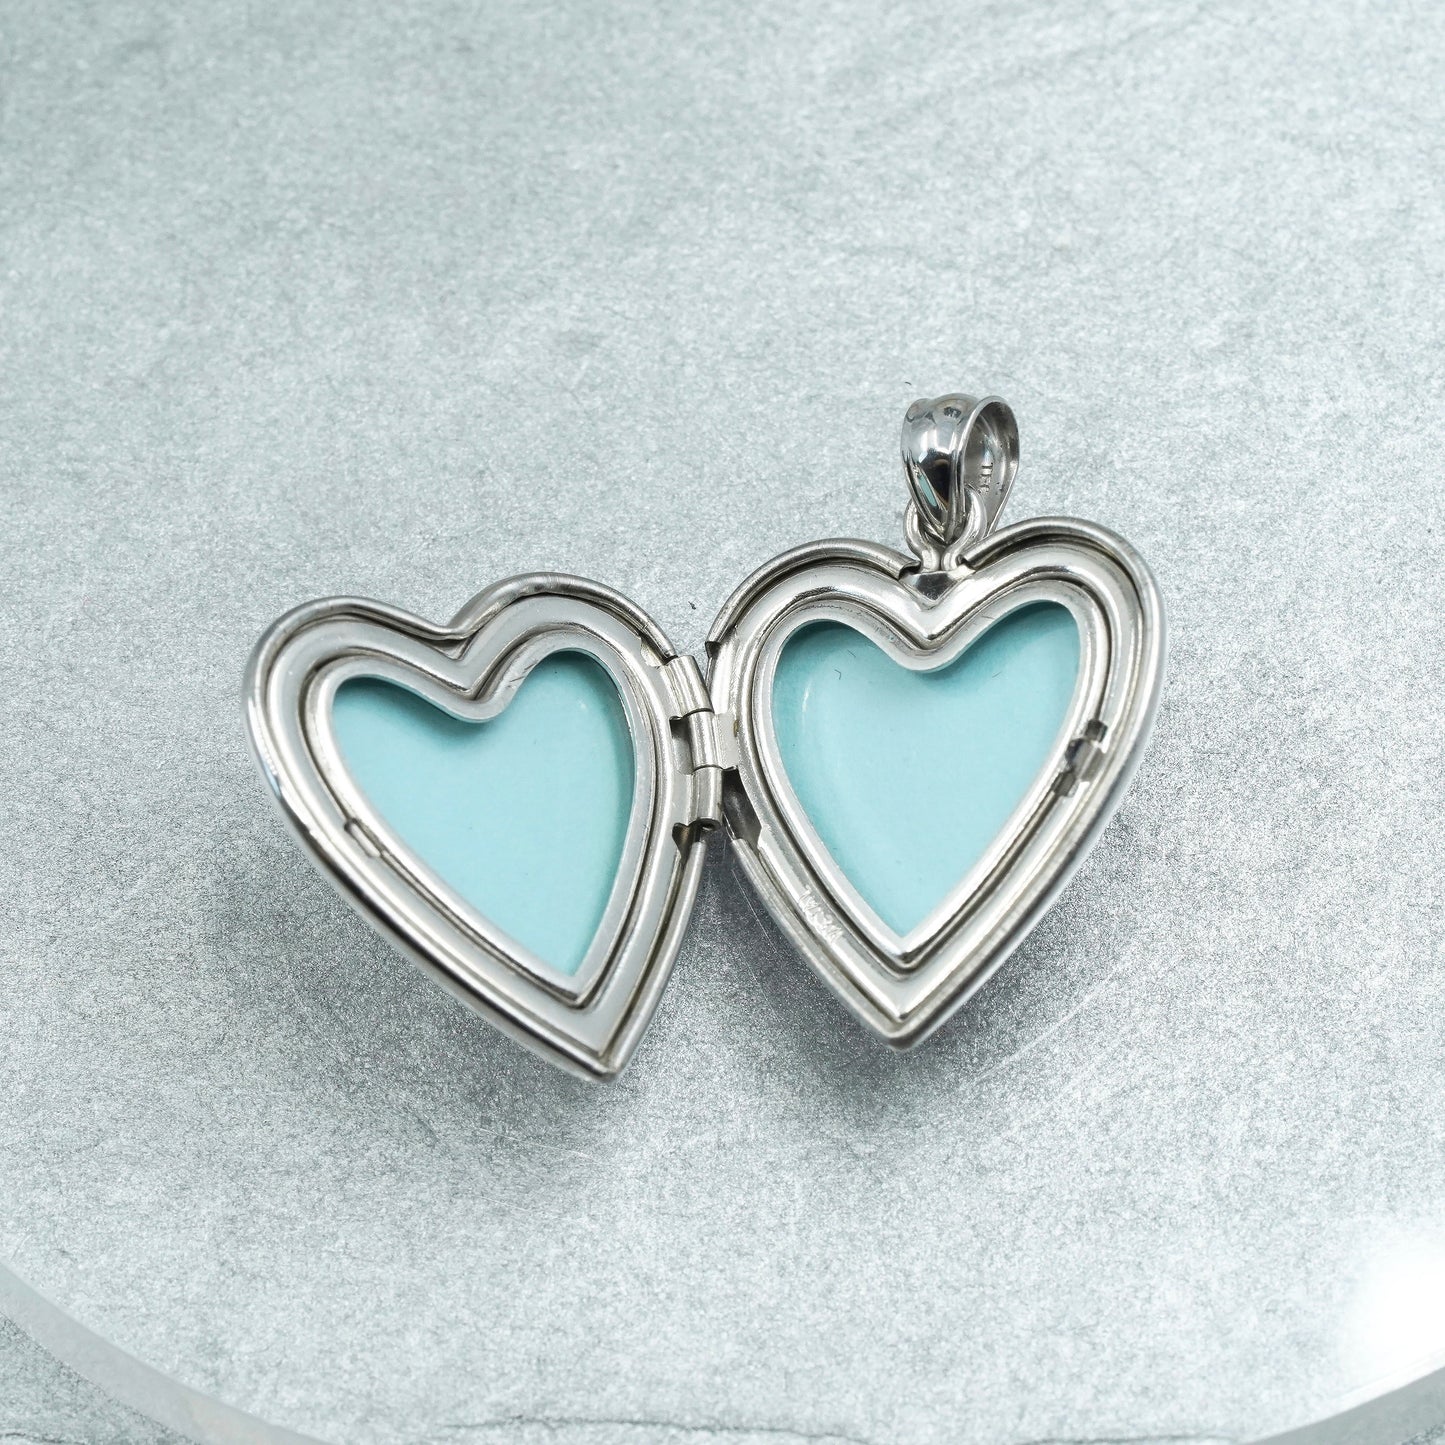 Sterling silver handmade charm, 925 heart photo locket “always in my heart”